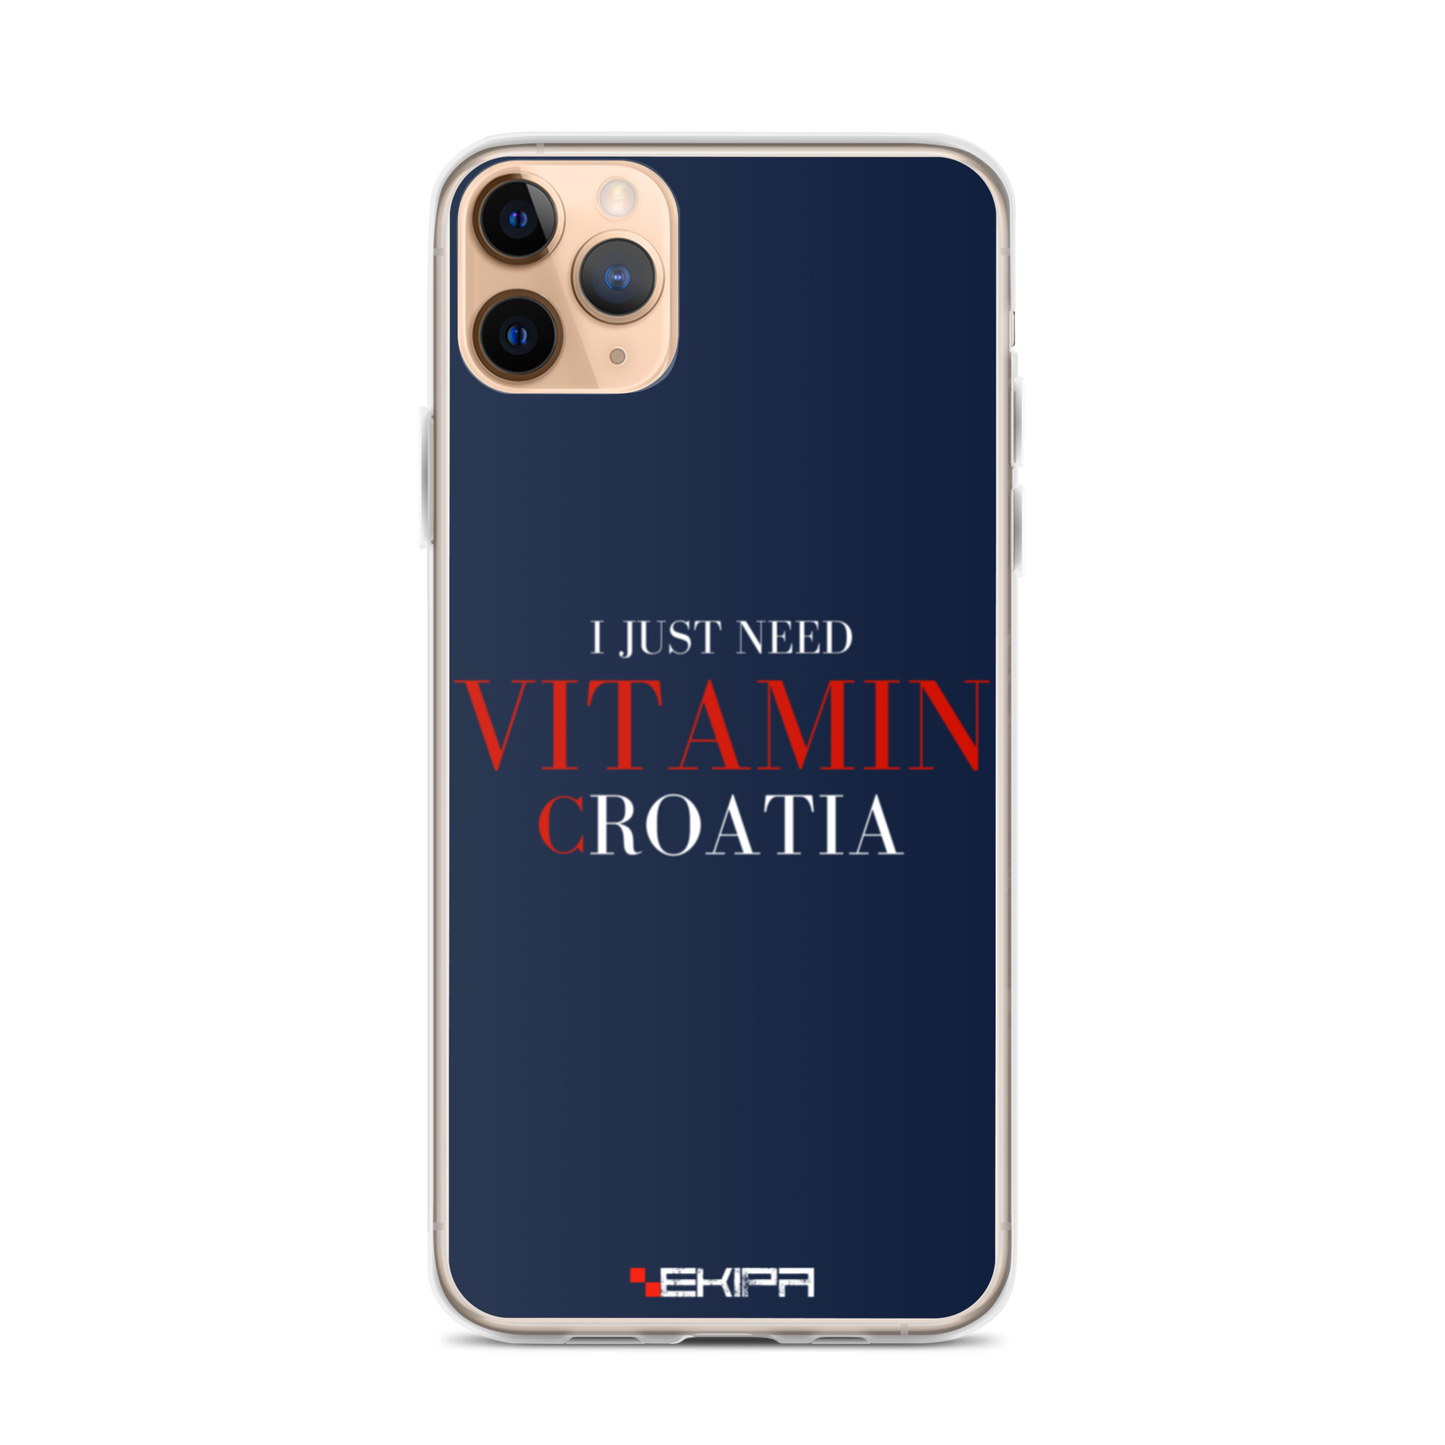 "Vitamin Croatia" - iPhone case